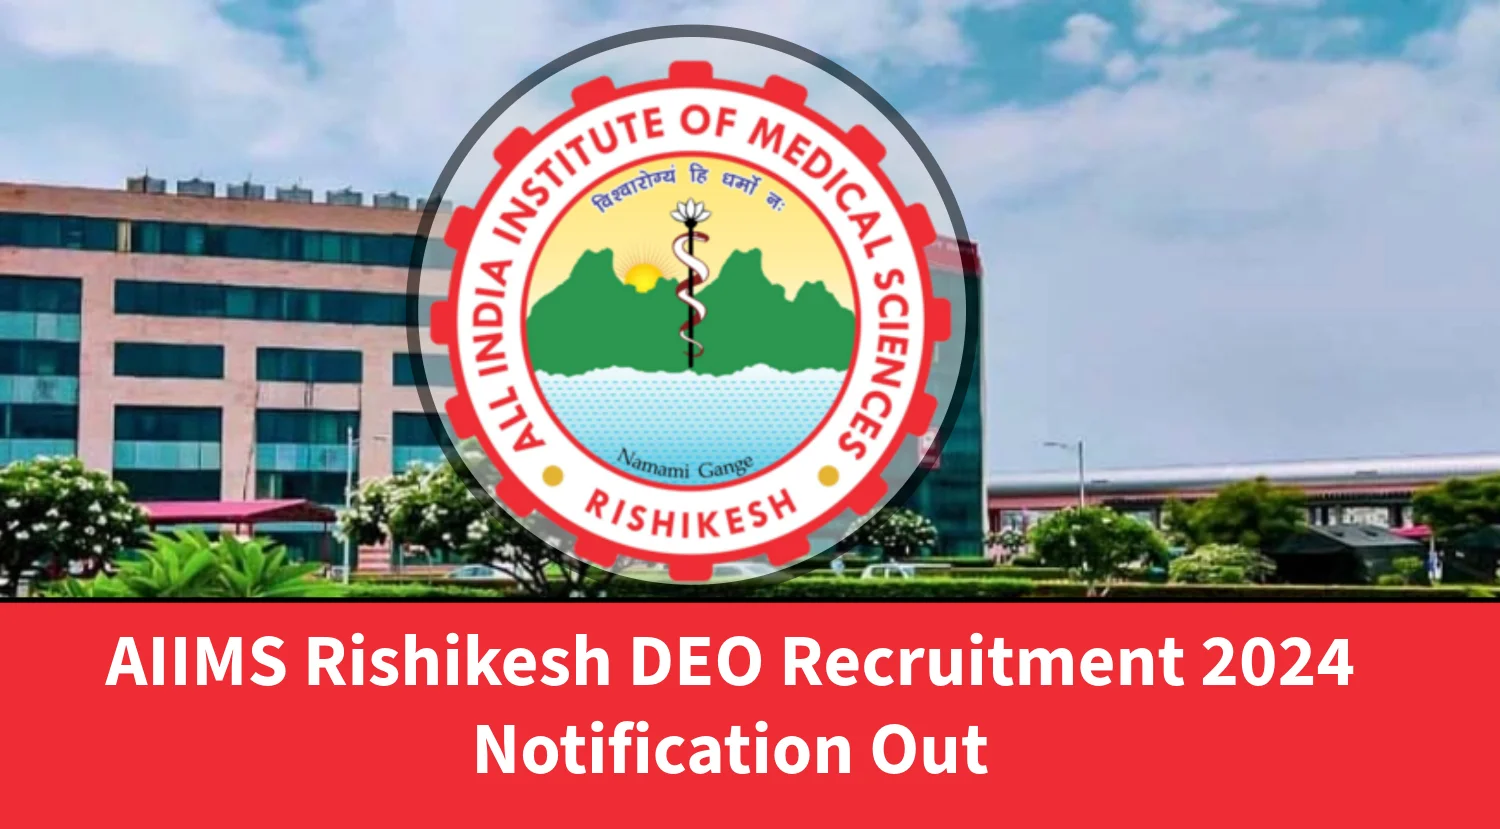 AIIMS Rishikesh DEO Recruitment 2024 Notification Out